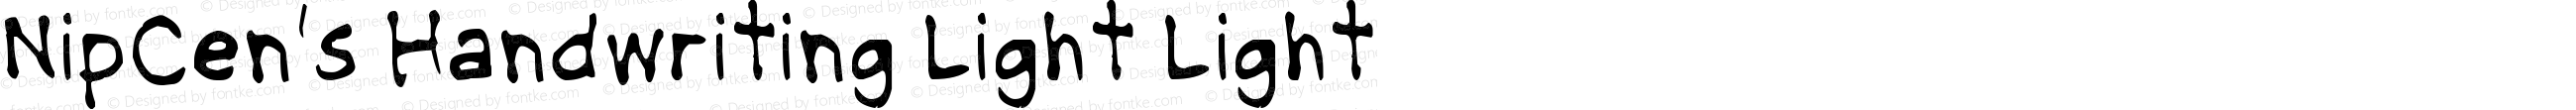 NipCen's Handwriting Light Light